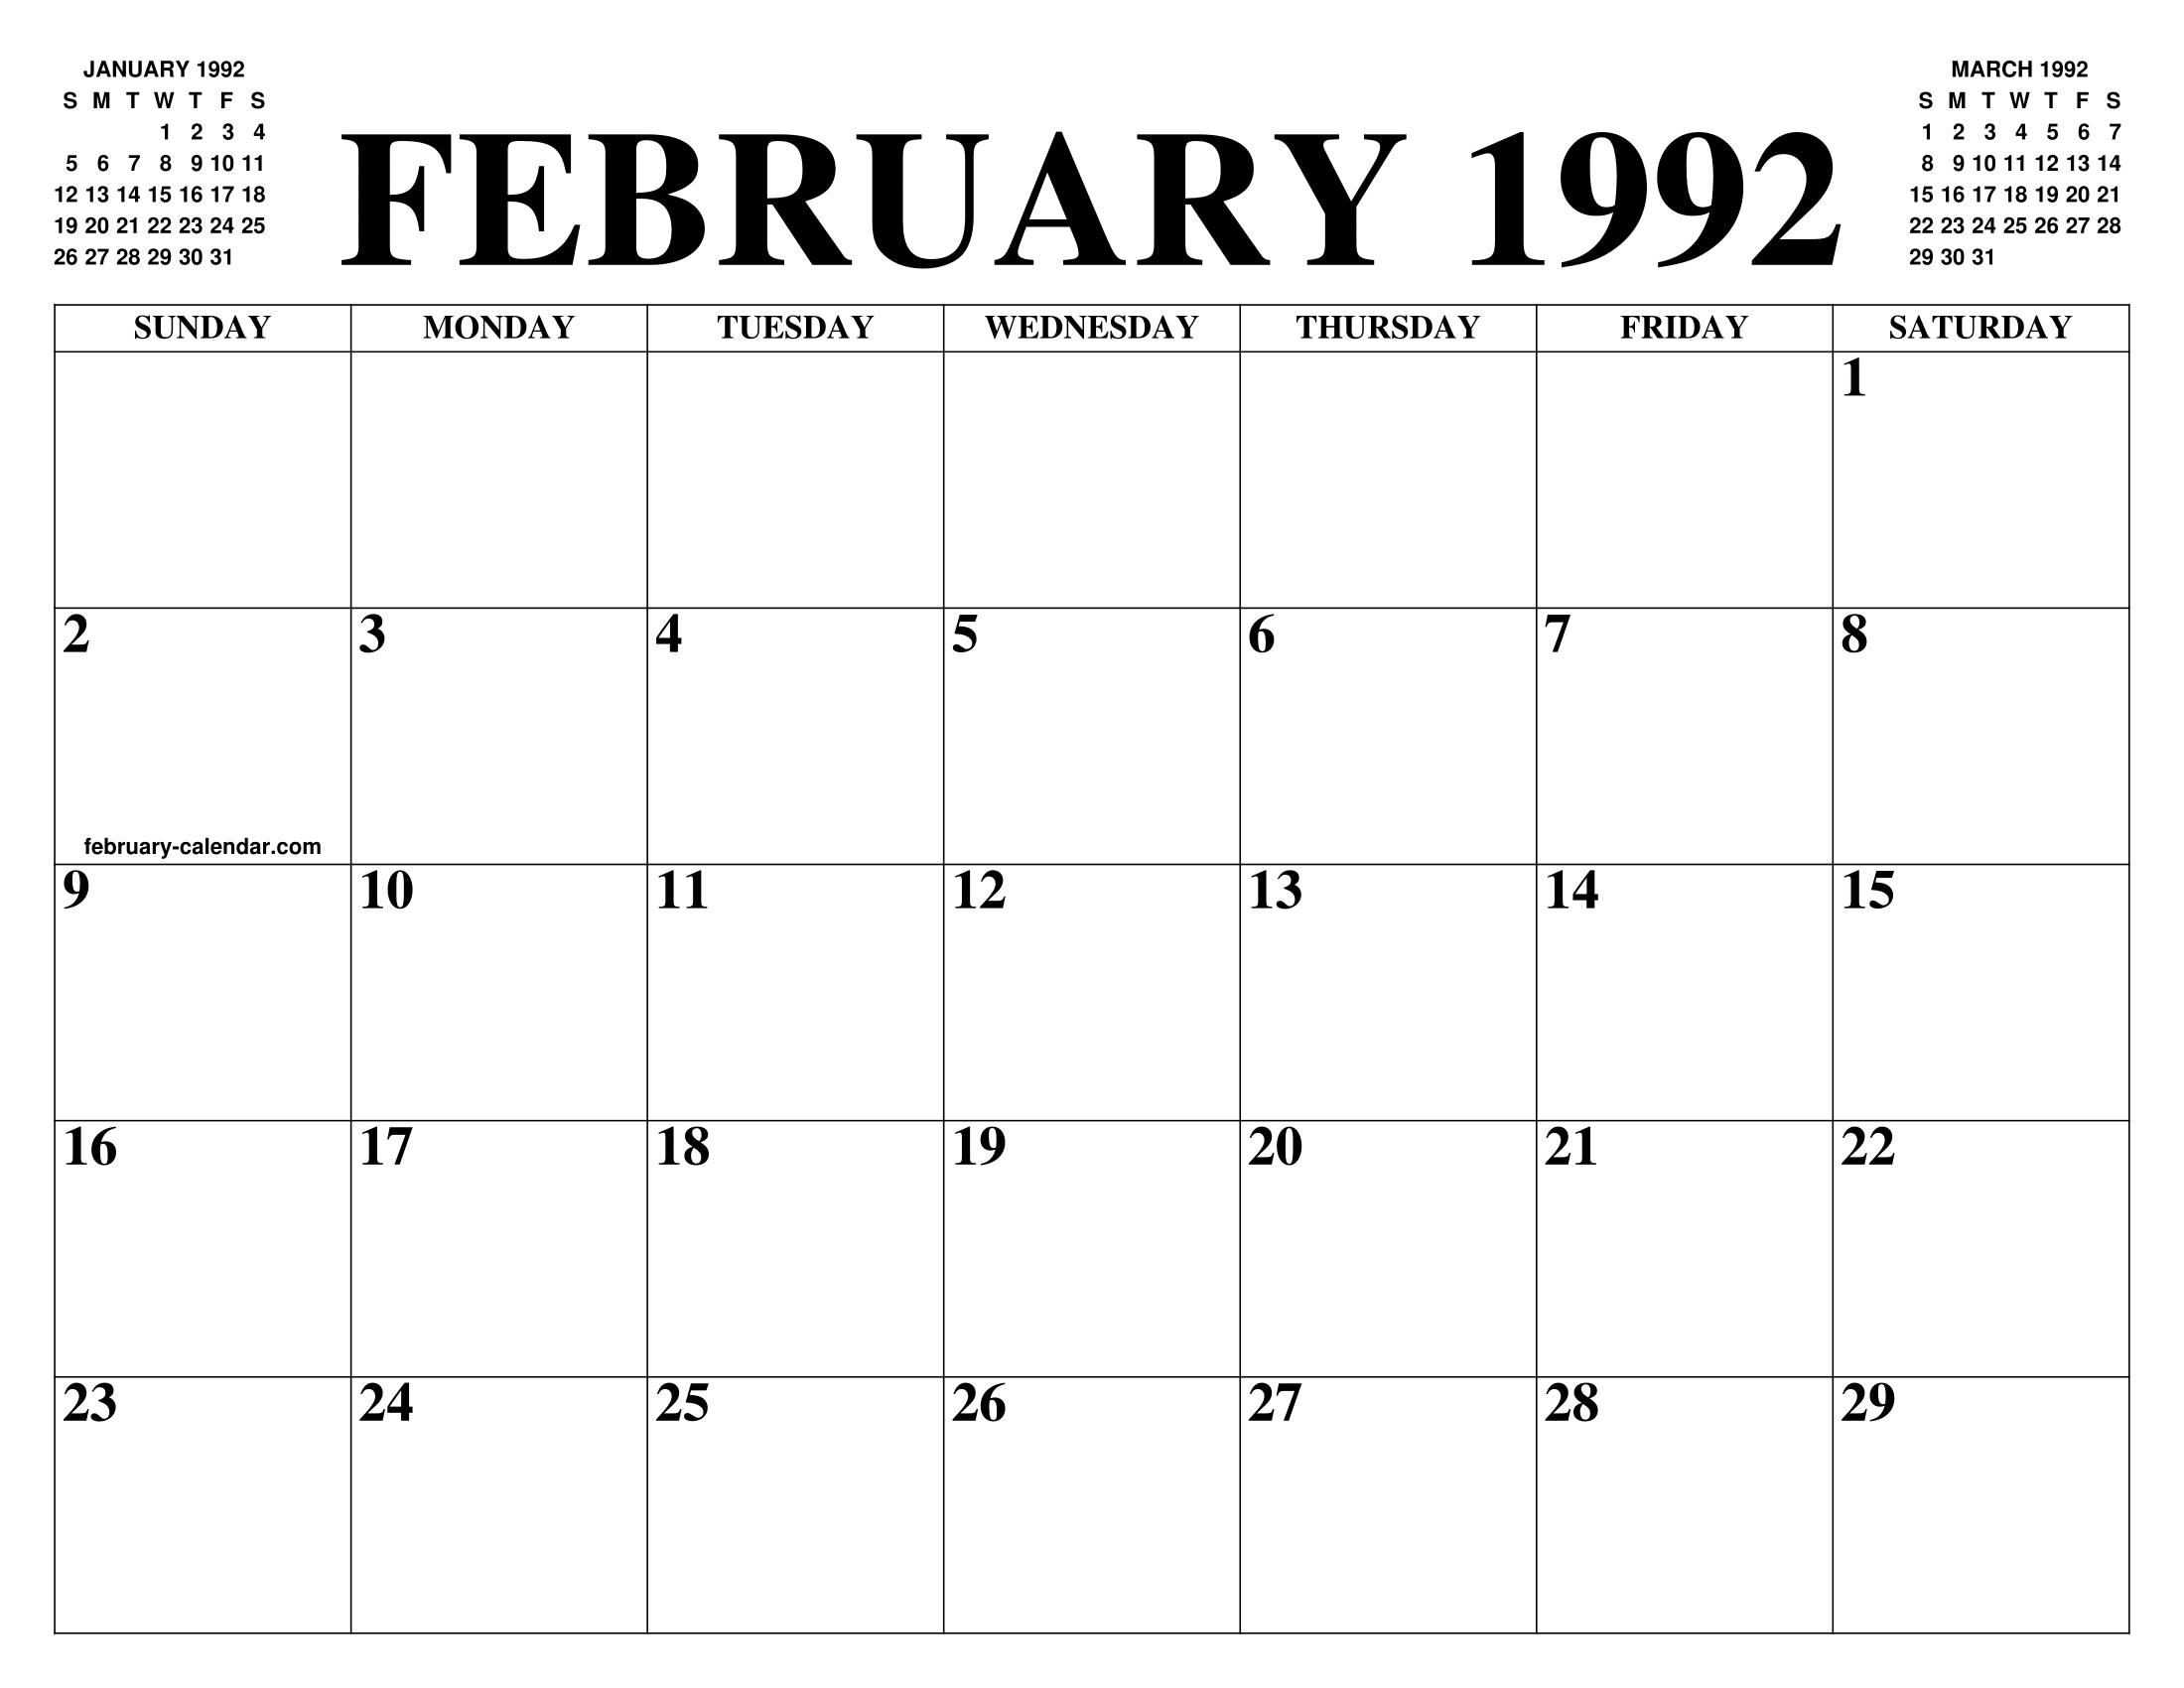 FEBRUARY 1992 CALENDAR OF THE MONTH: FREE PRINTABLE FEBRUARY CALENDAR